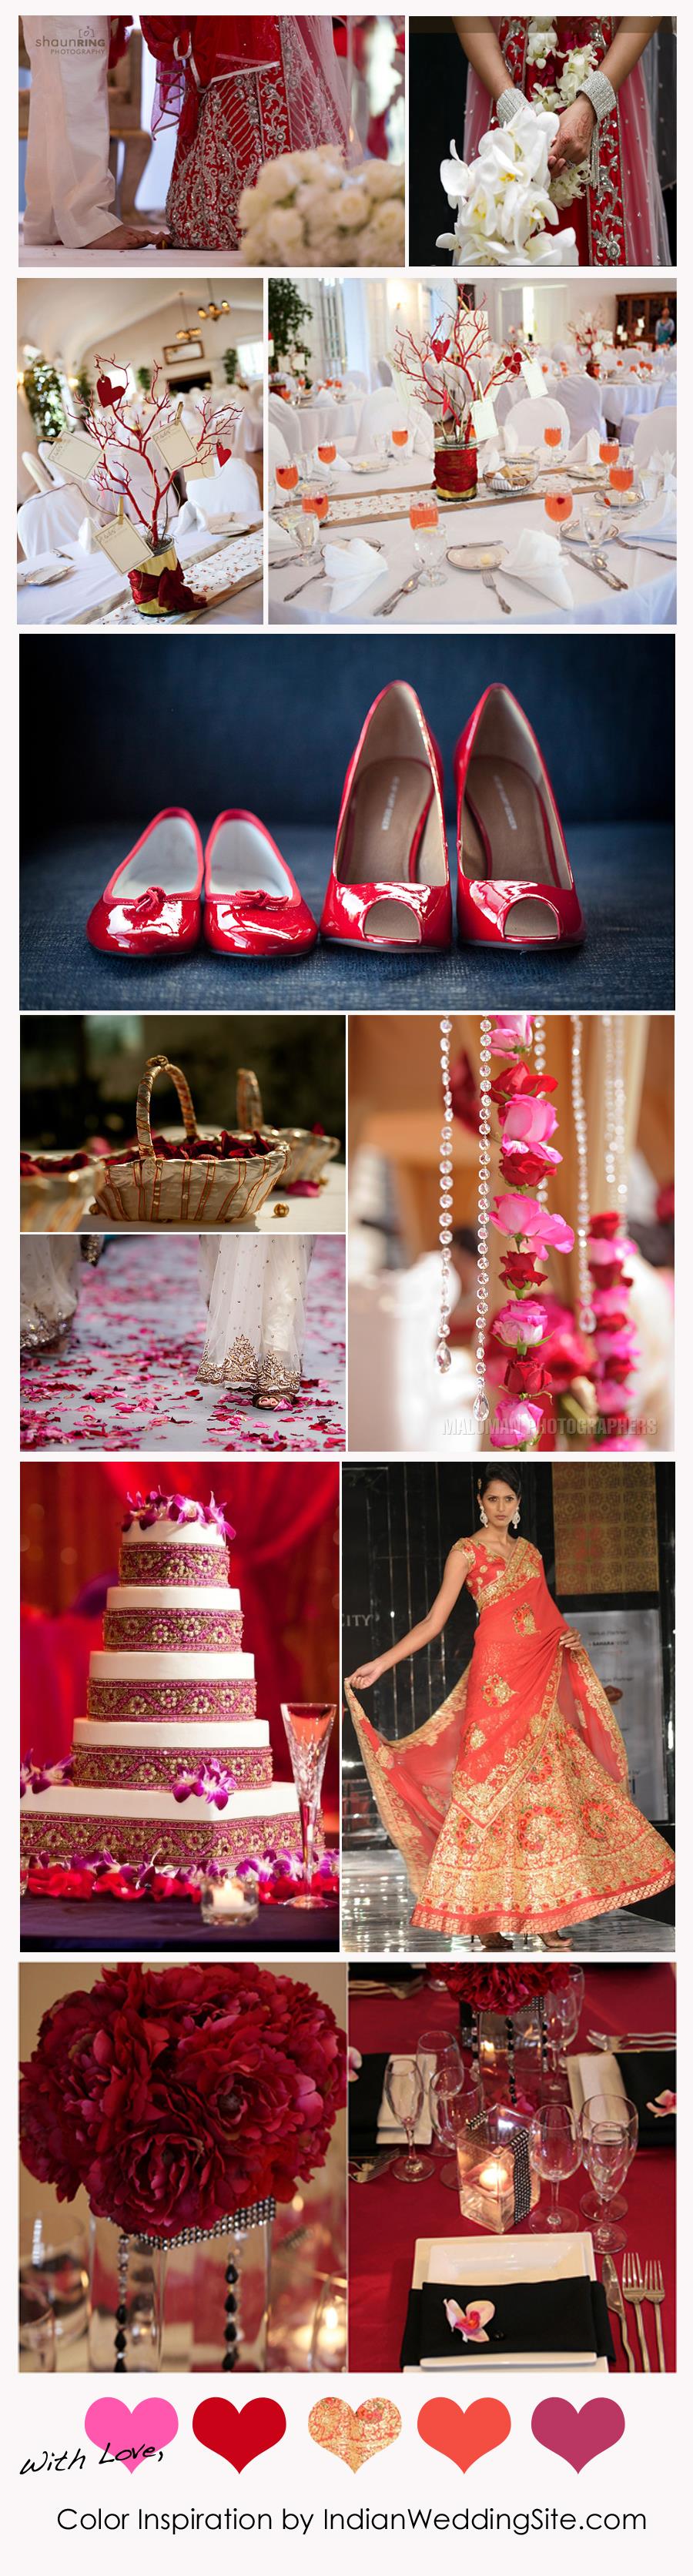 Indian Wedding Color Inspiration - Valentine